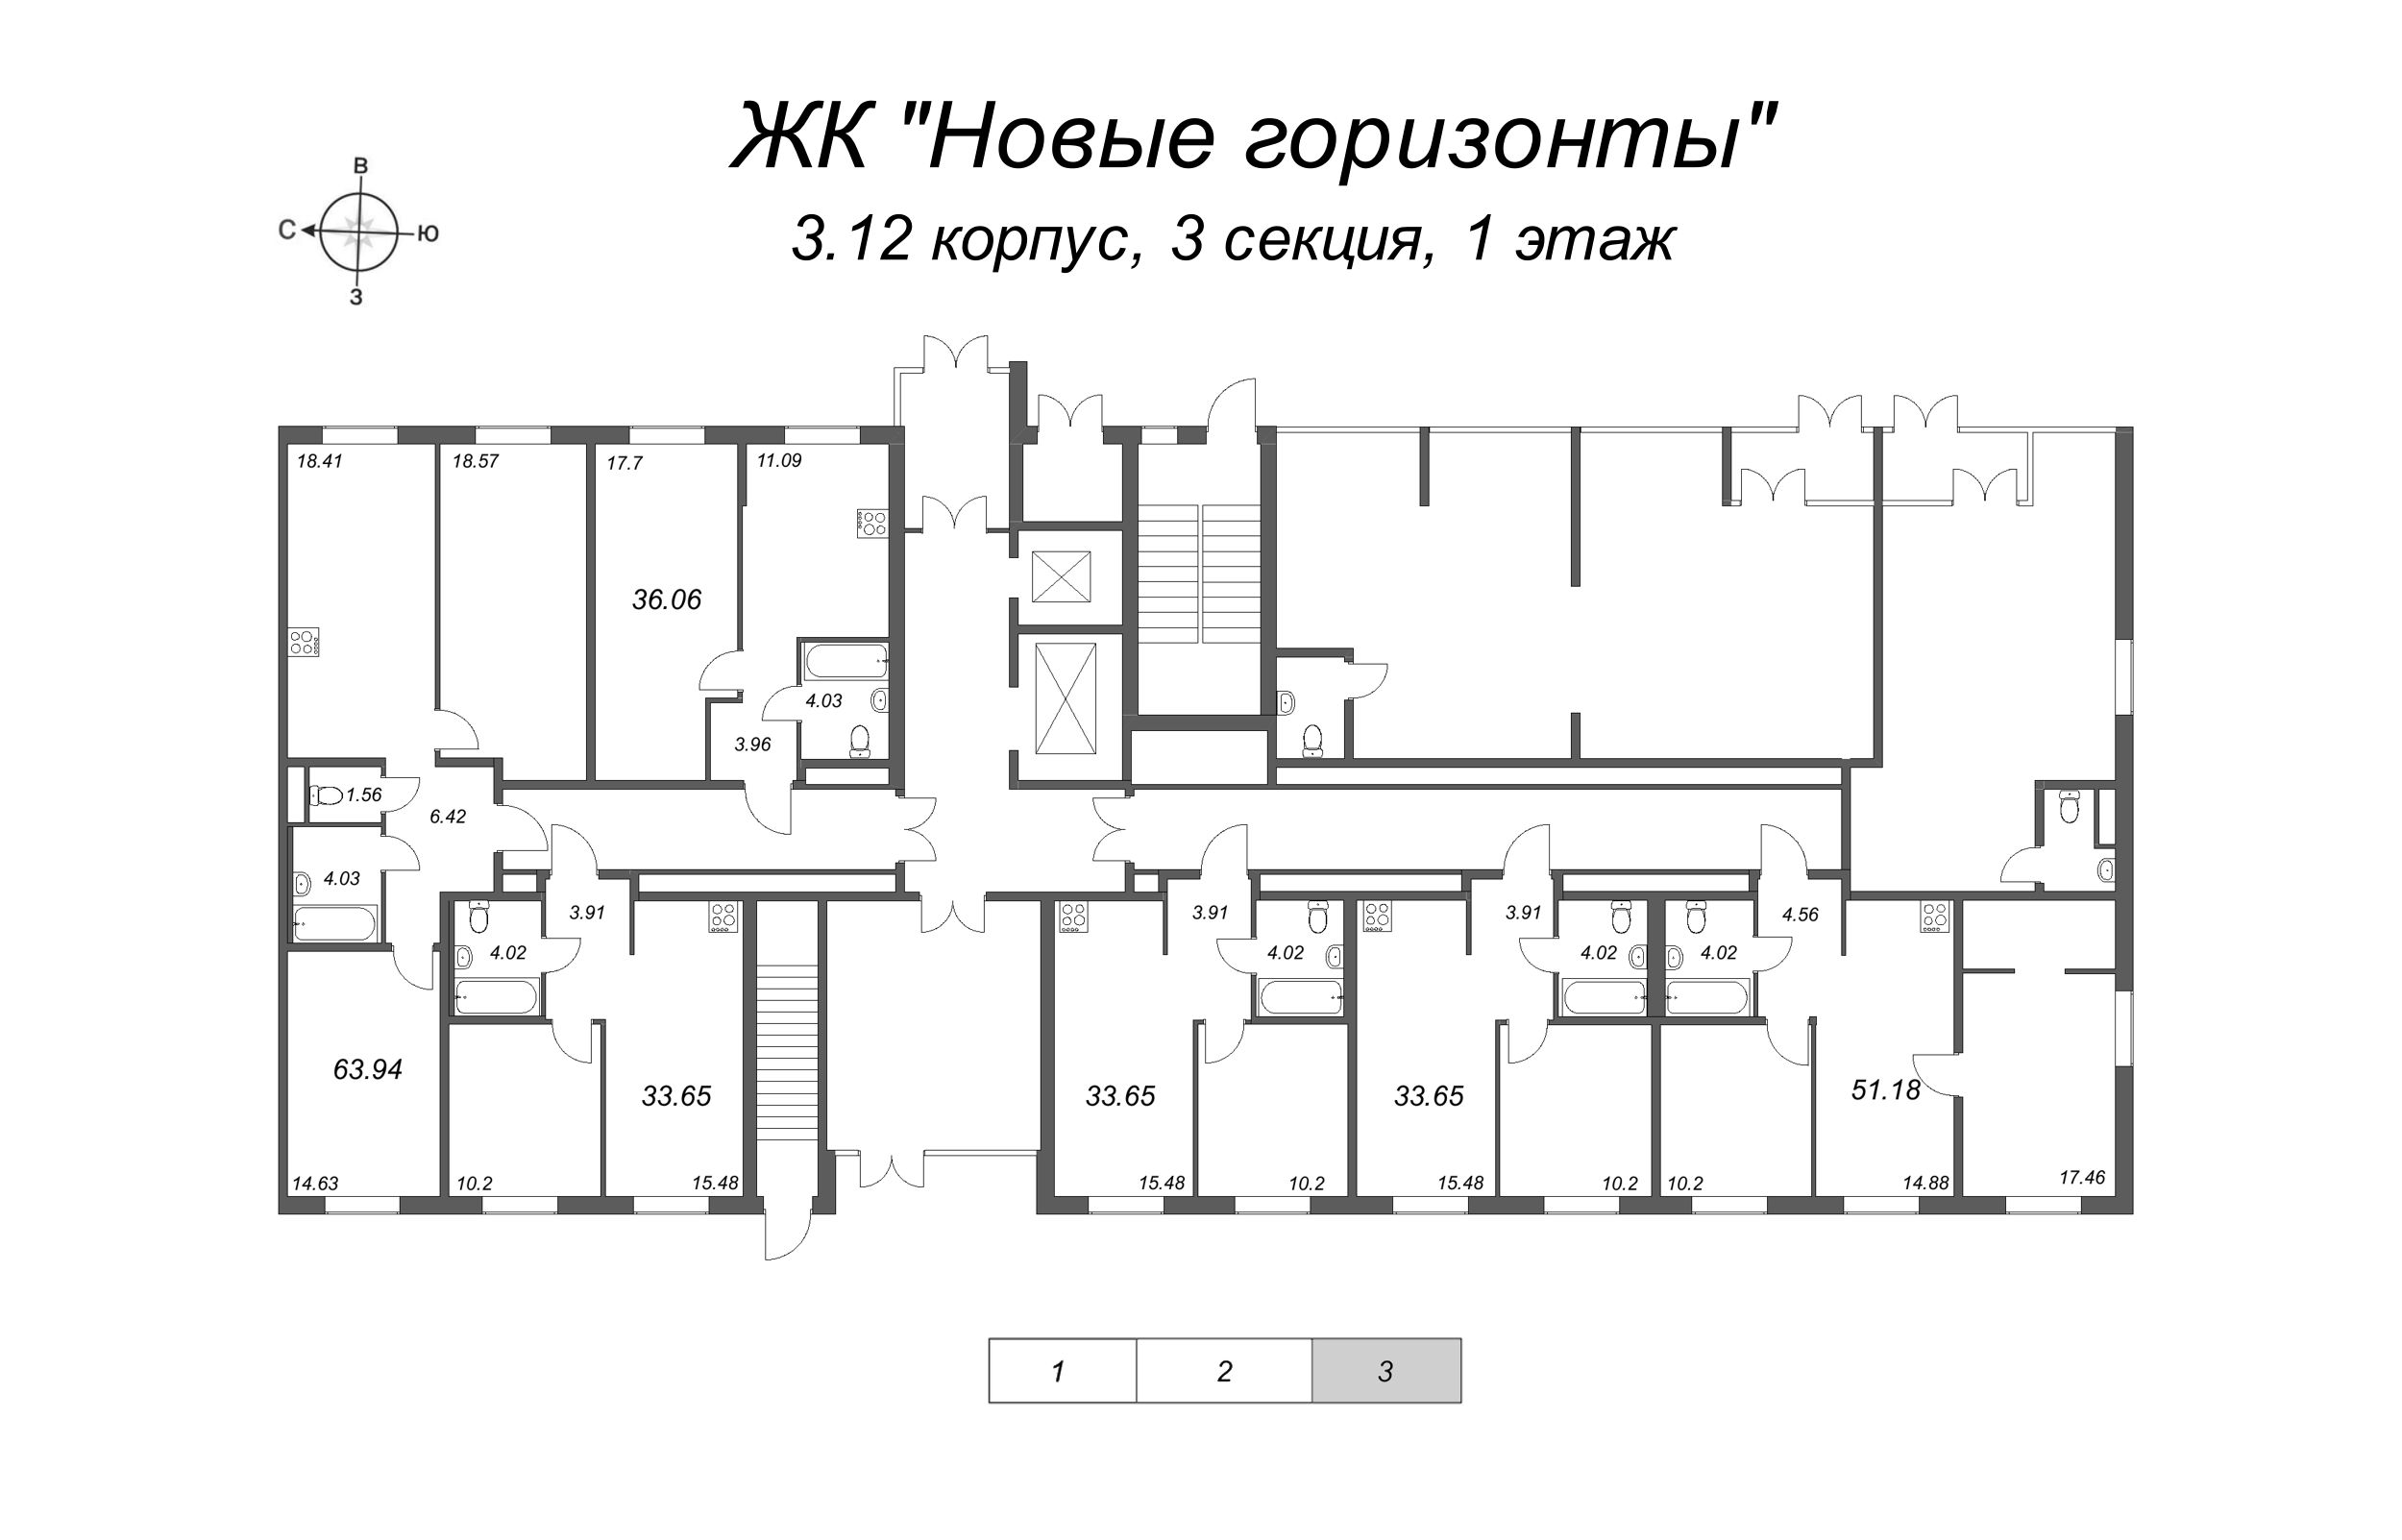 2-комнатная (Евро) квартира, 33.65 м² - планировка этажа